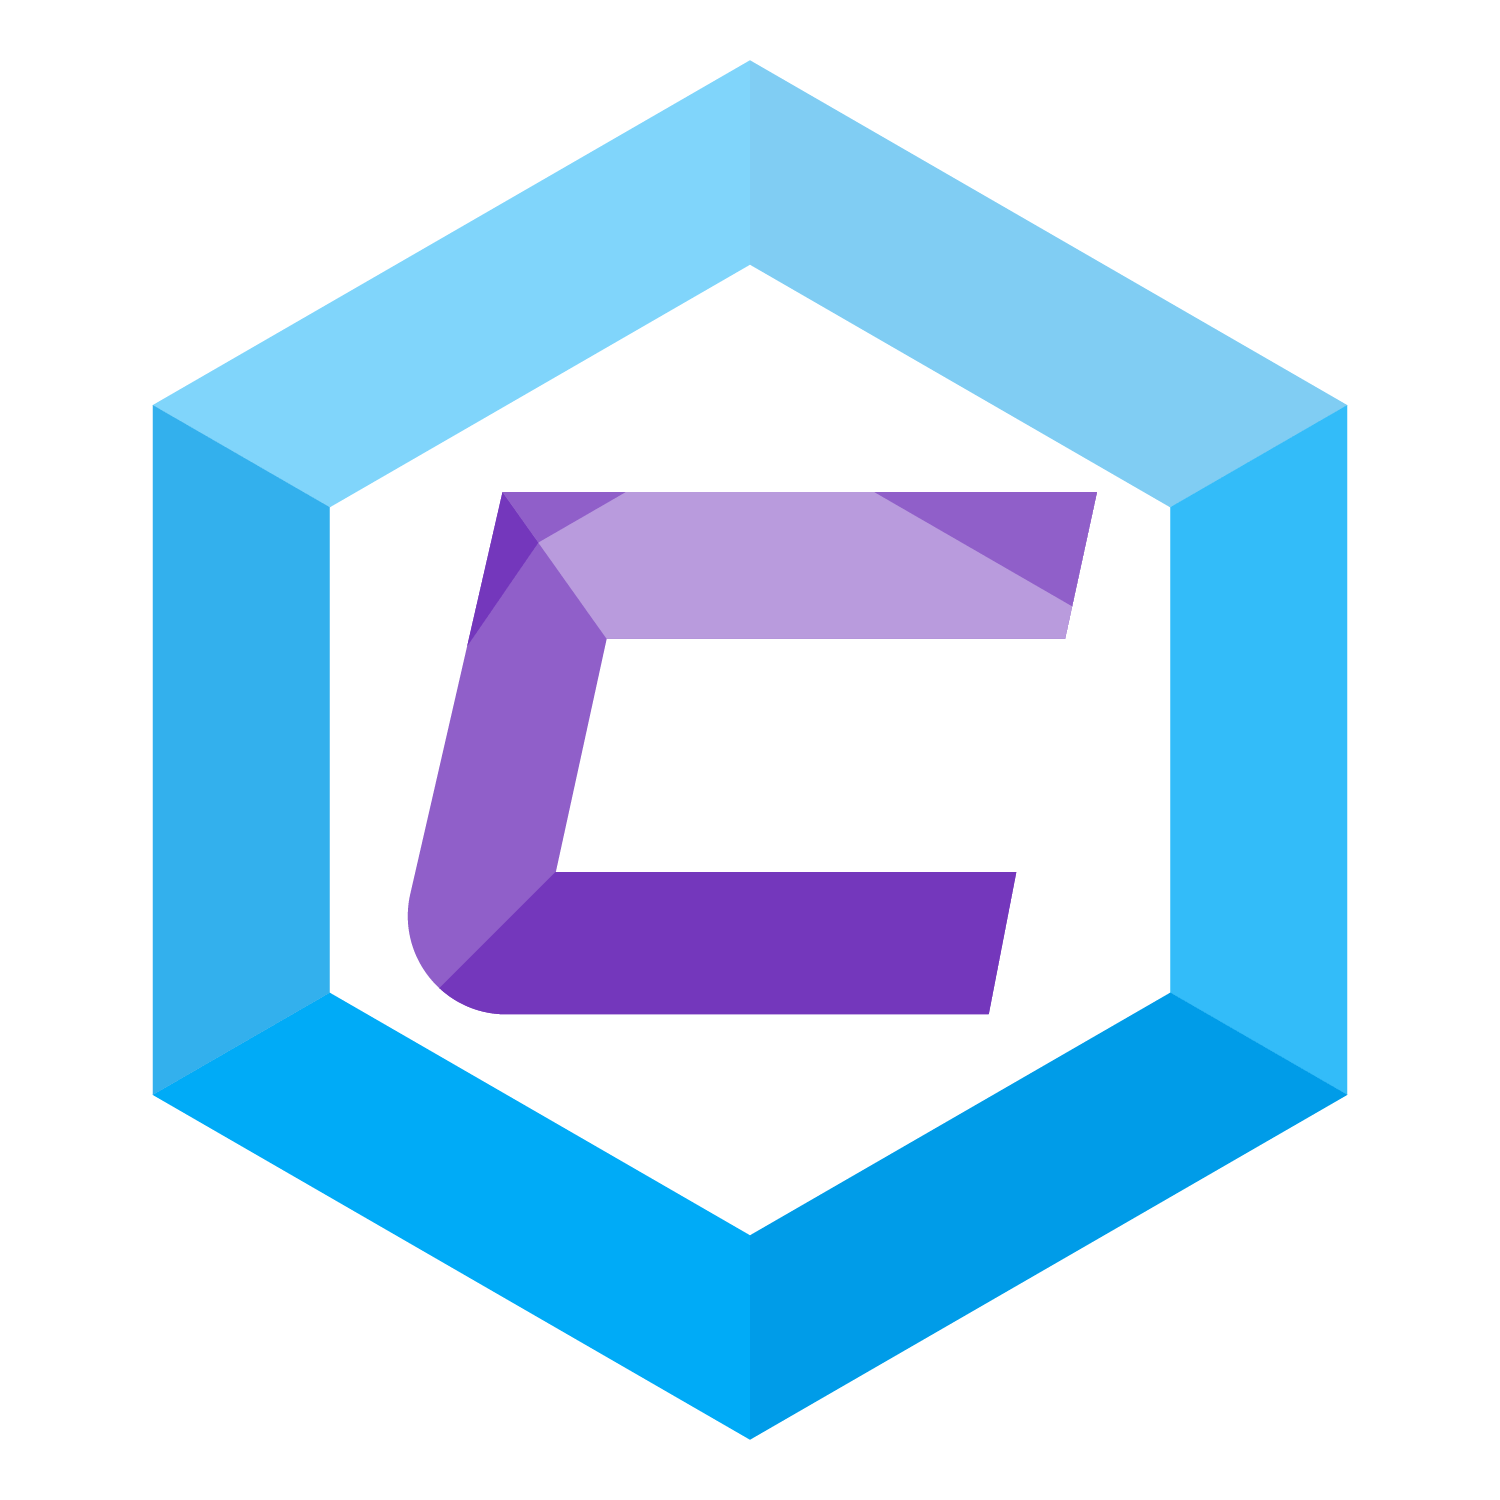 Purple C Logo - How to make logo more 3D while flat? Design Stack Exchange